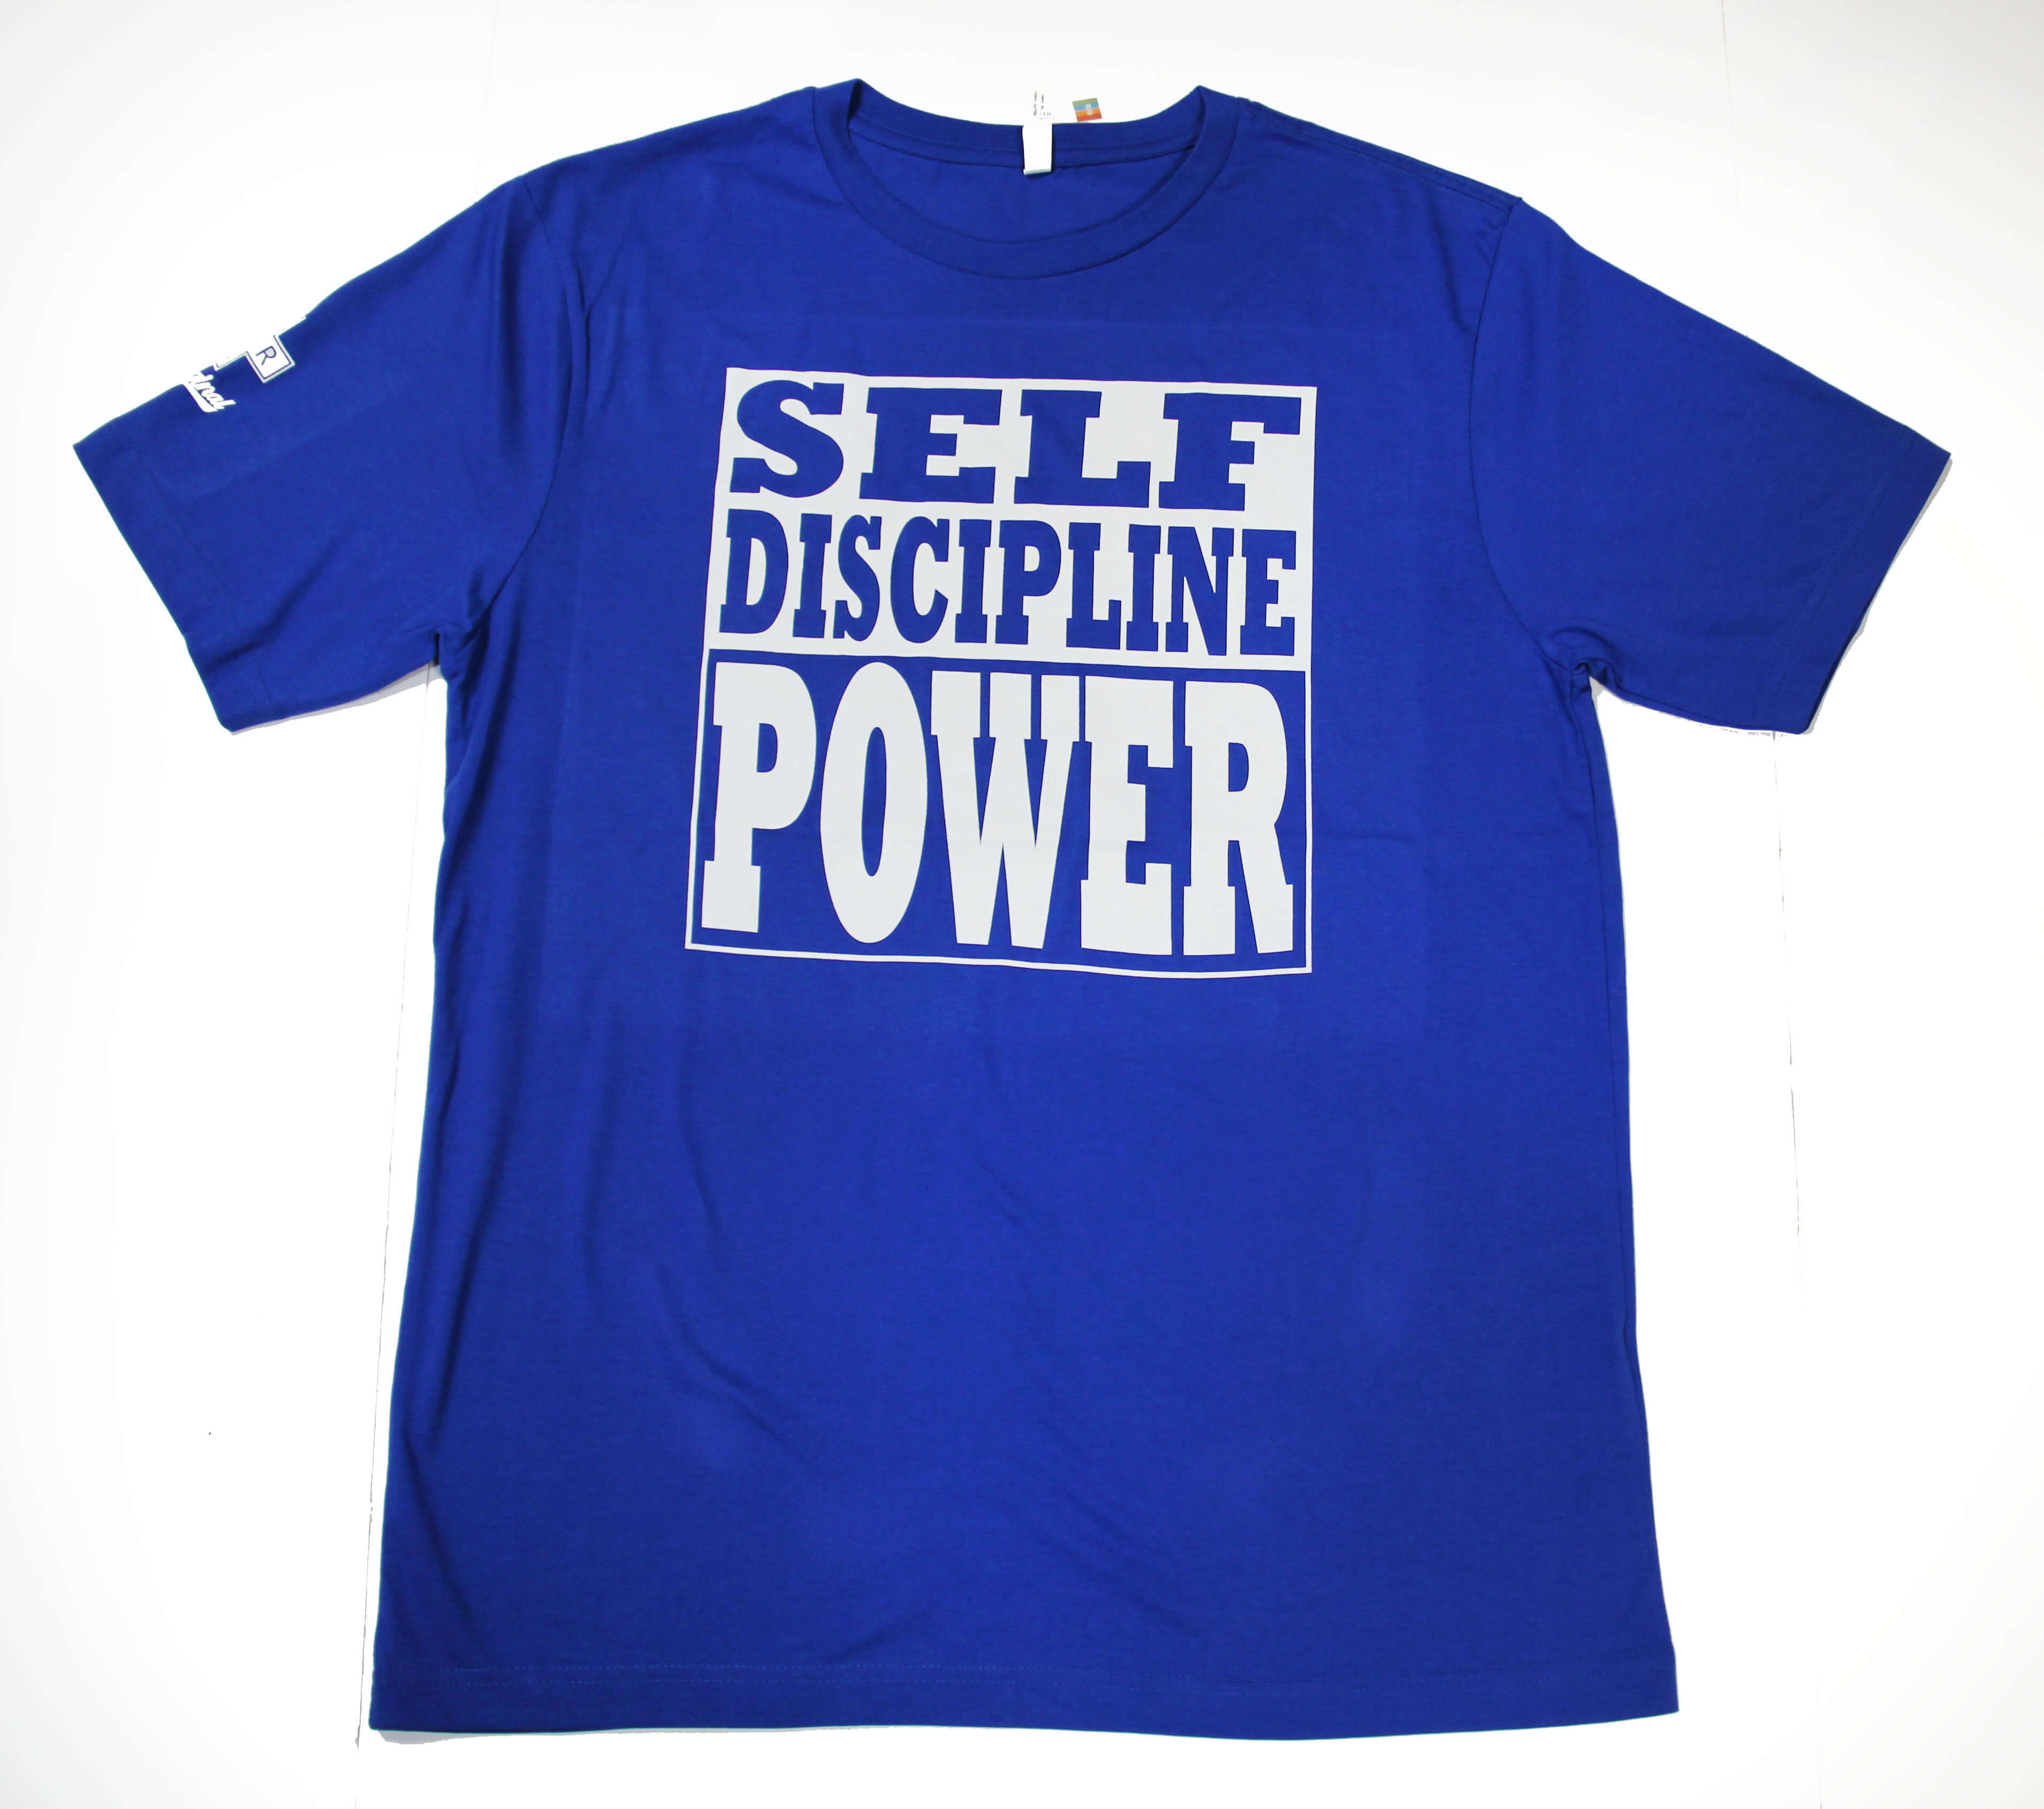 "Self Discipline Is Power" Men's Crewneck - ORIGINAL print